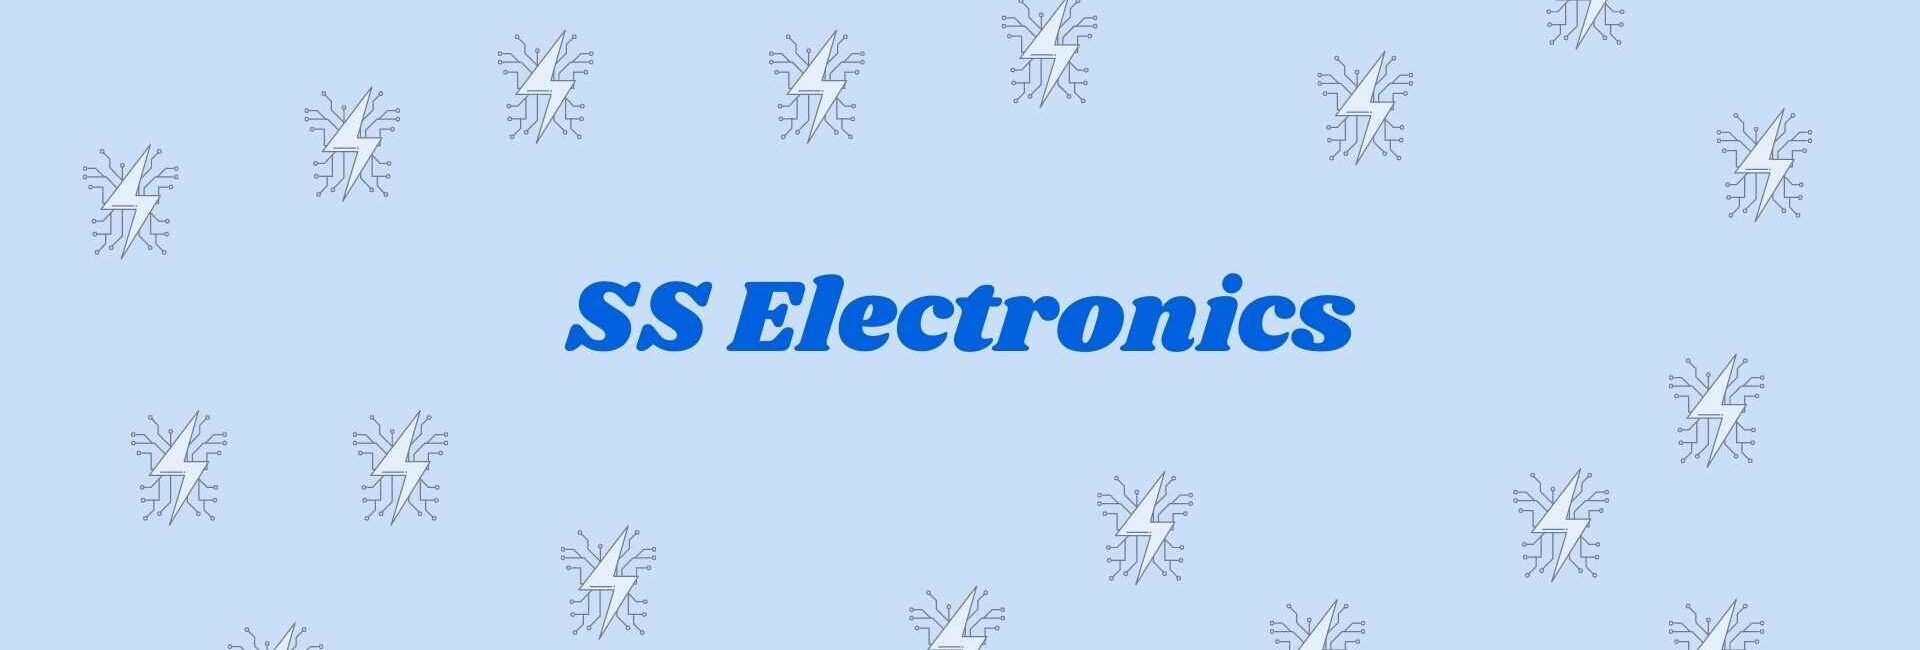 SS Electronics - Electronics Goods Dealer in Noida